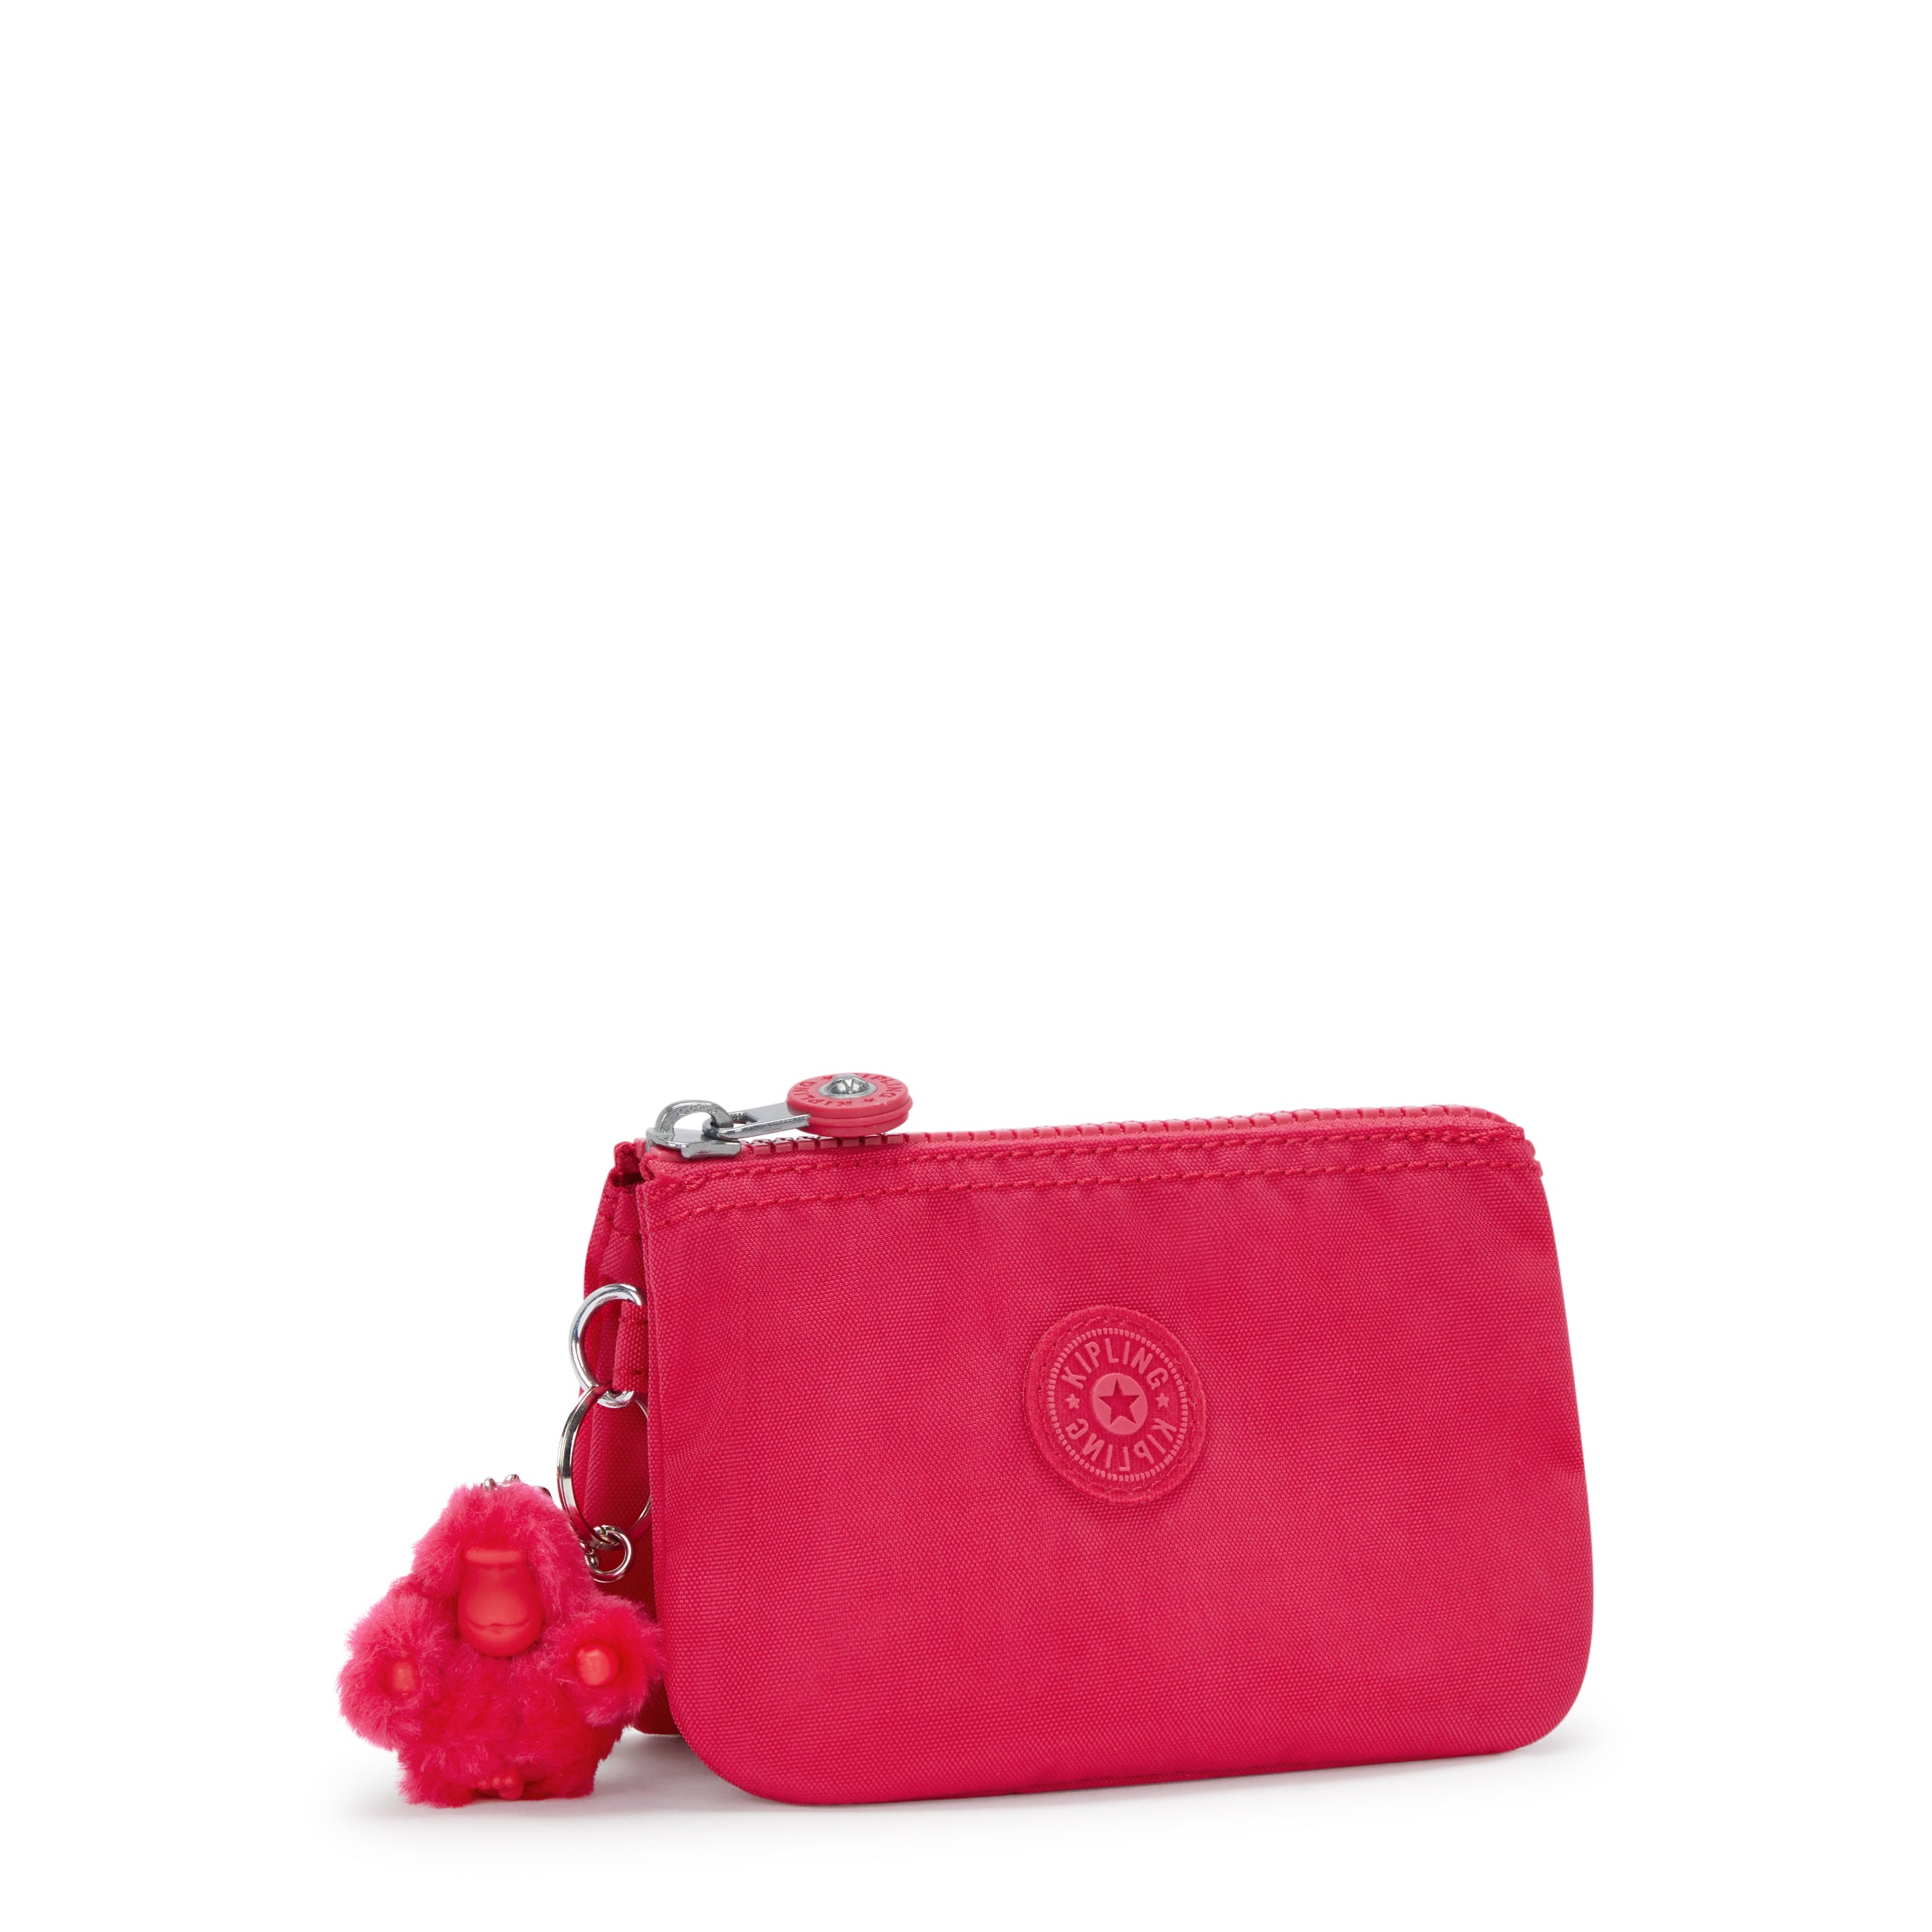 KIPLING-Creativity S-Small purse-Confetti Pink-01864-T73